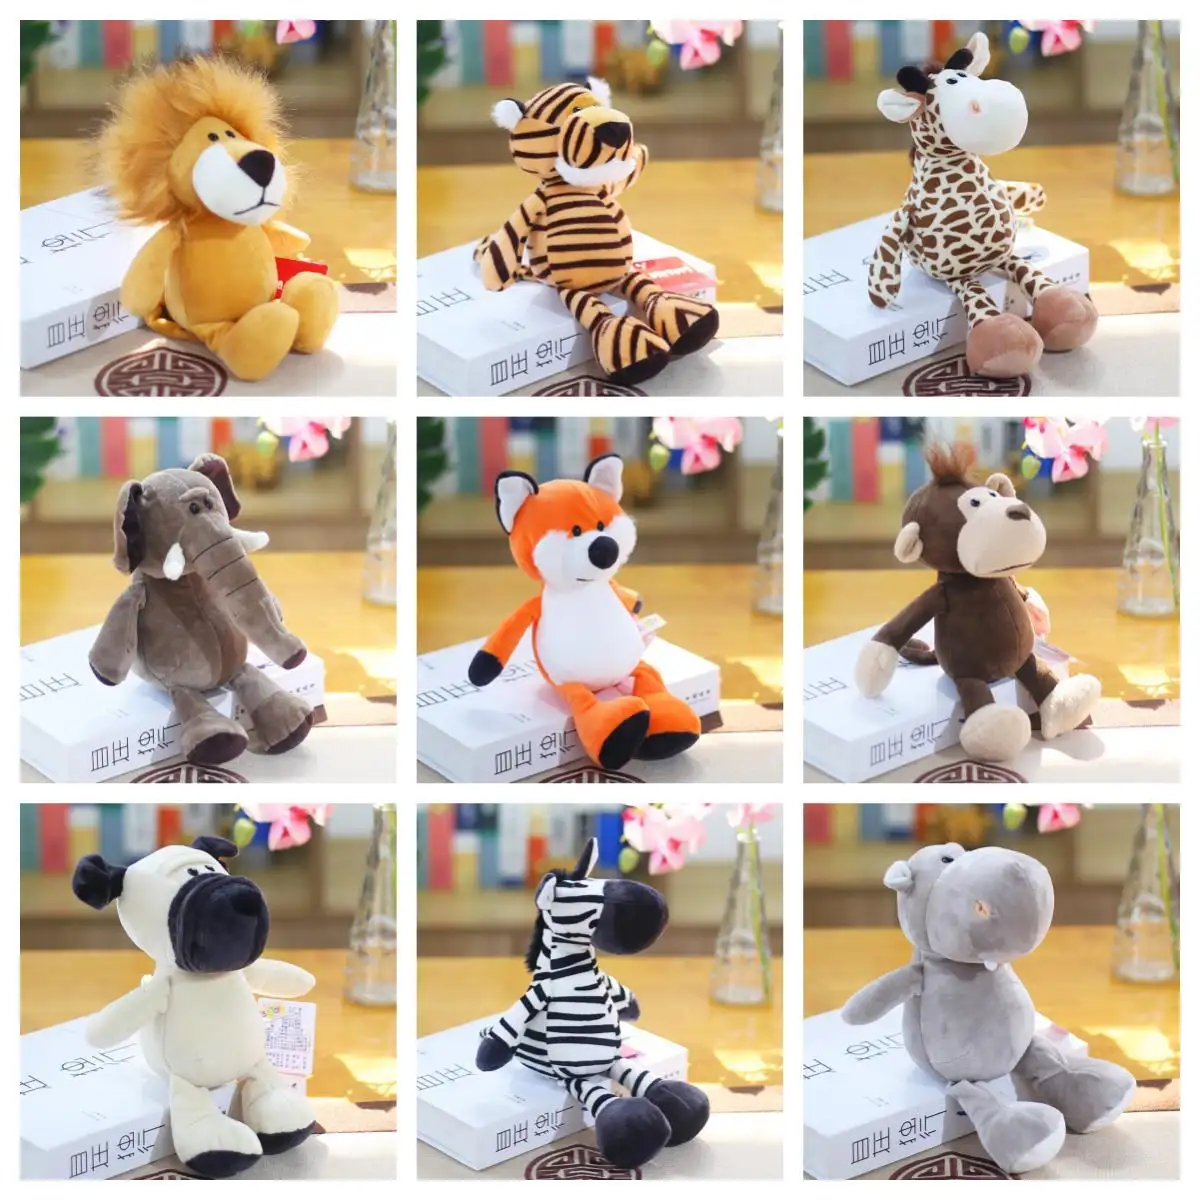 Best Selling Cute Cartoon Elephant Monkey Giraffe Tiger Lion Plush Zoo Animal Stuffed Toys for Kids